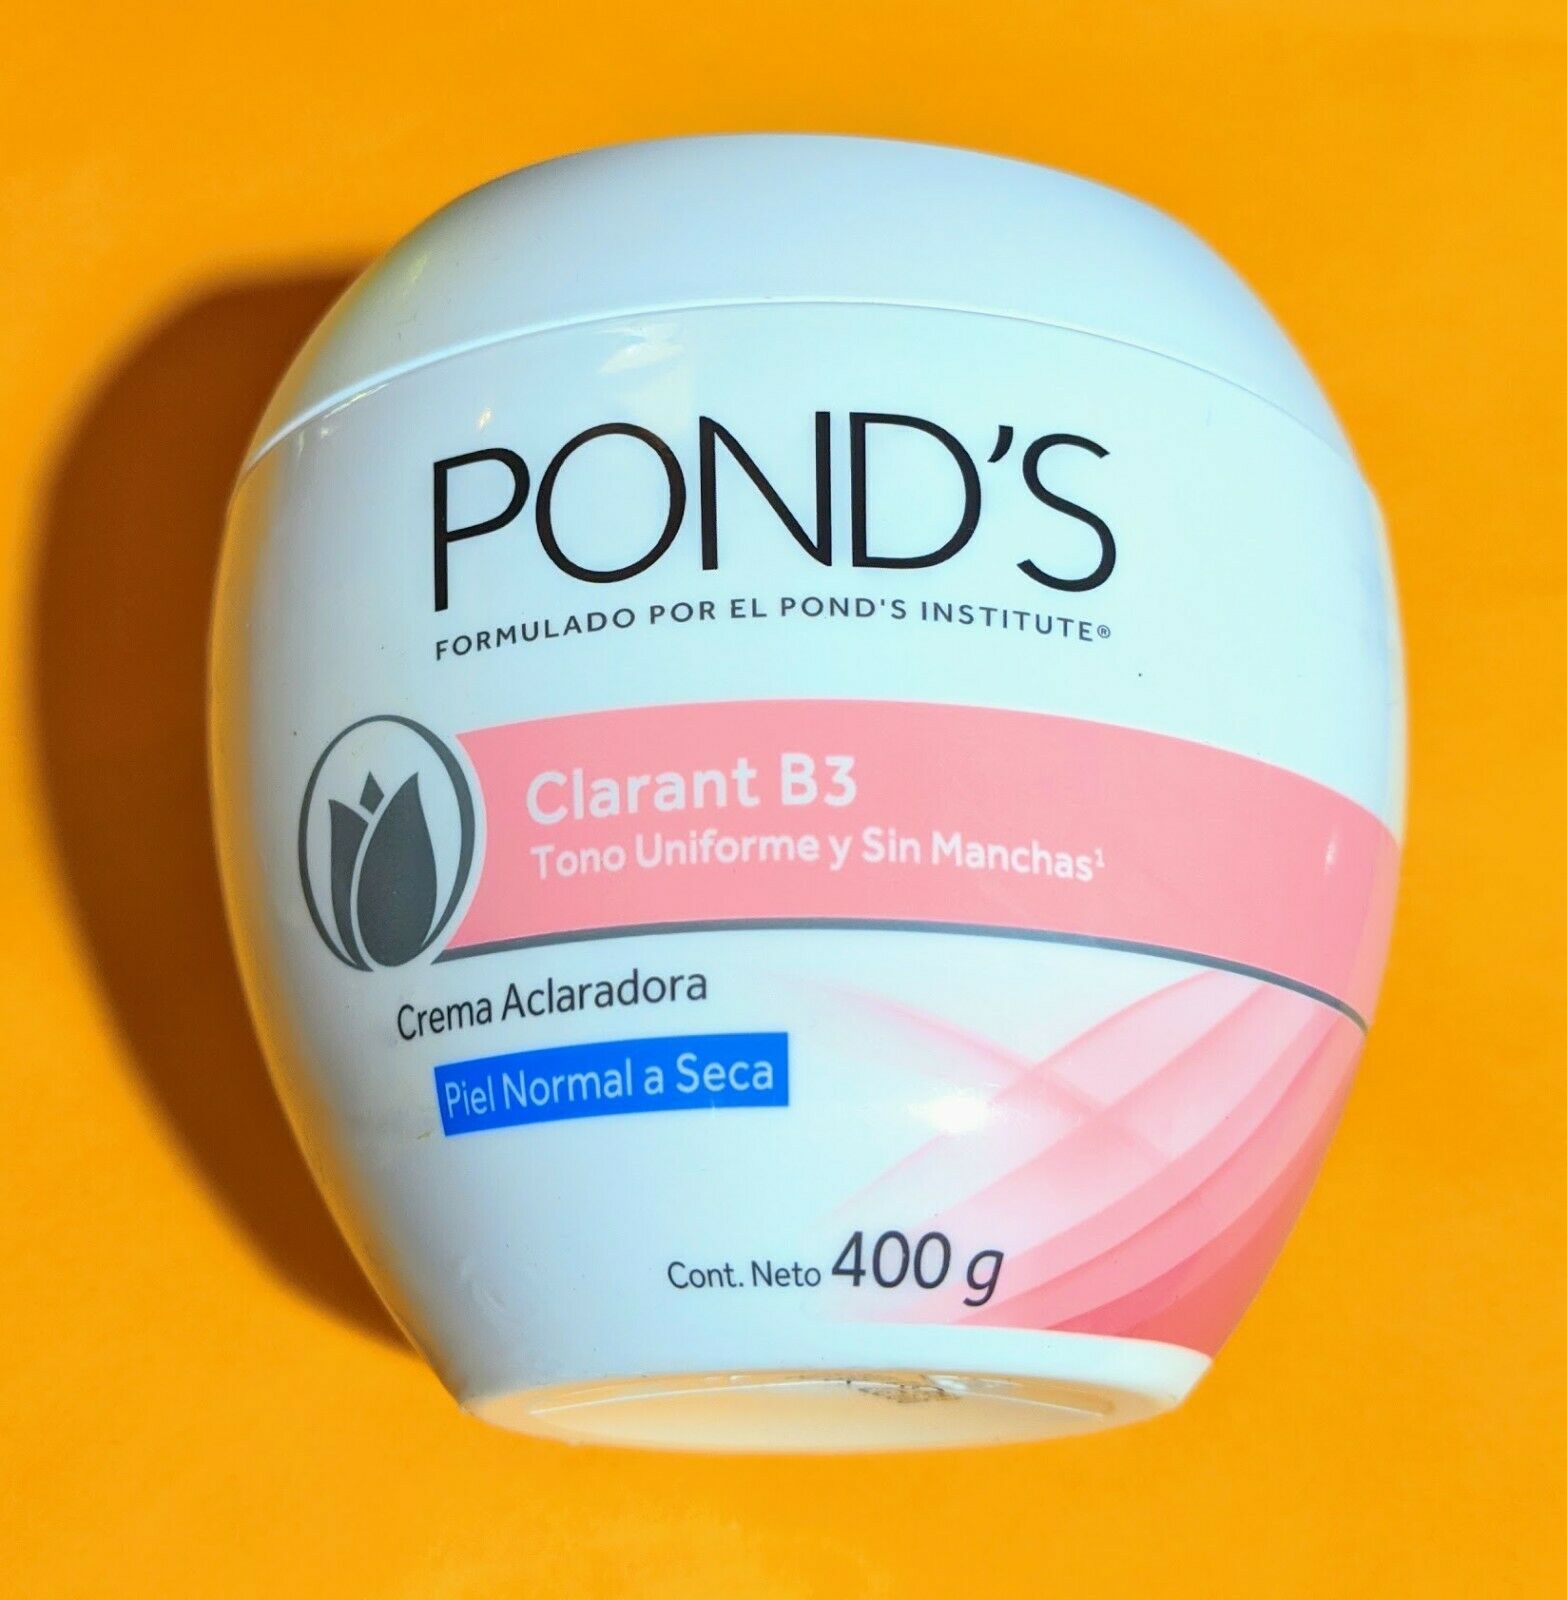 Pond's Clarant B3 Normal2Dry Skin Piel Normal&Seca 14oz 400g Lightning†Aclarante - $19.87